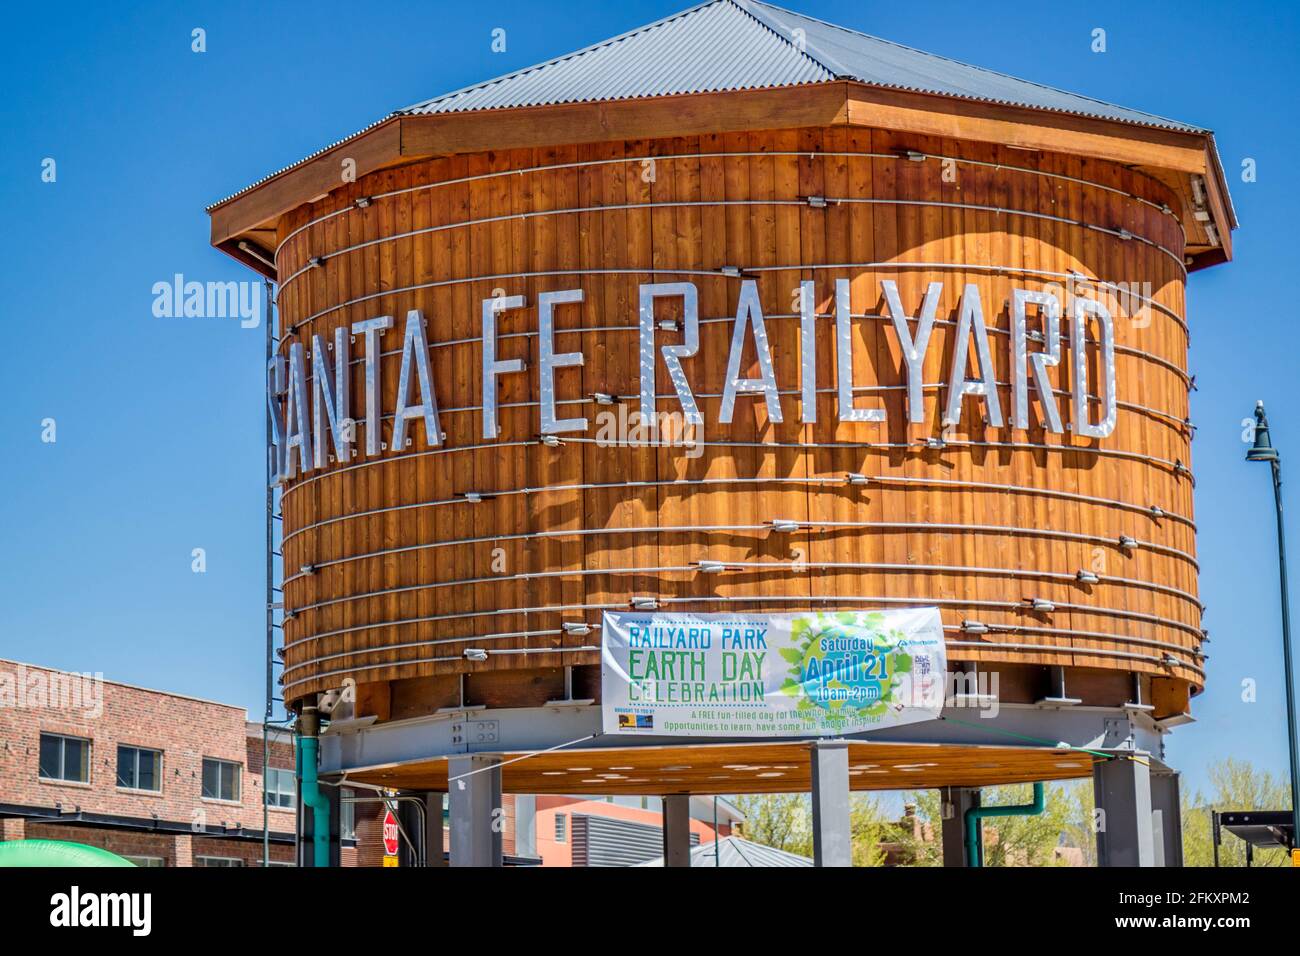 Santa Fe, NM, USA - April 14, 2018: The Santa Fe Railyard welcoming si Stock Photo